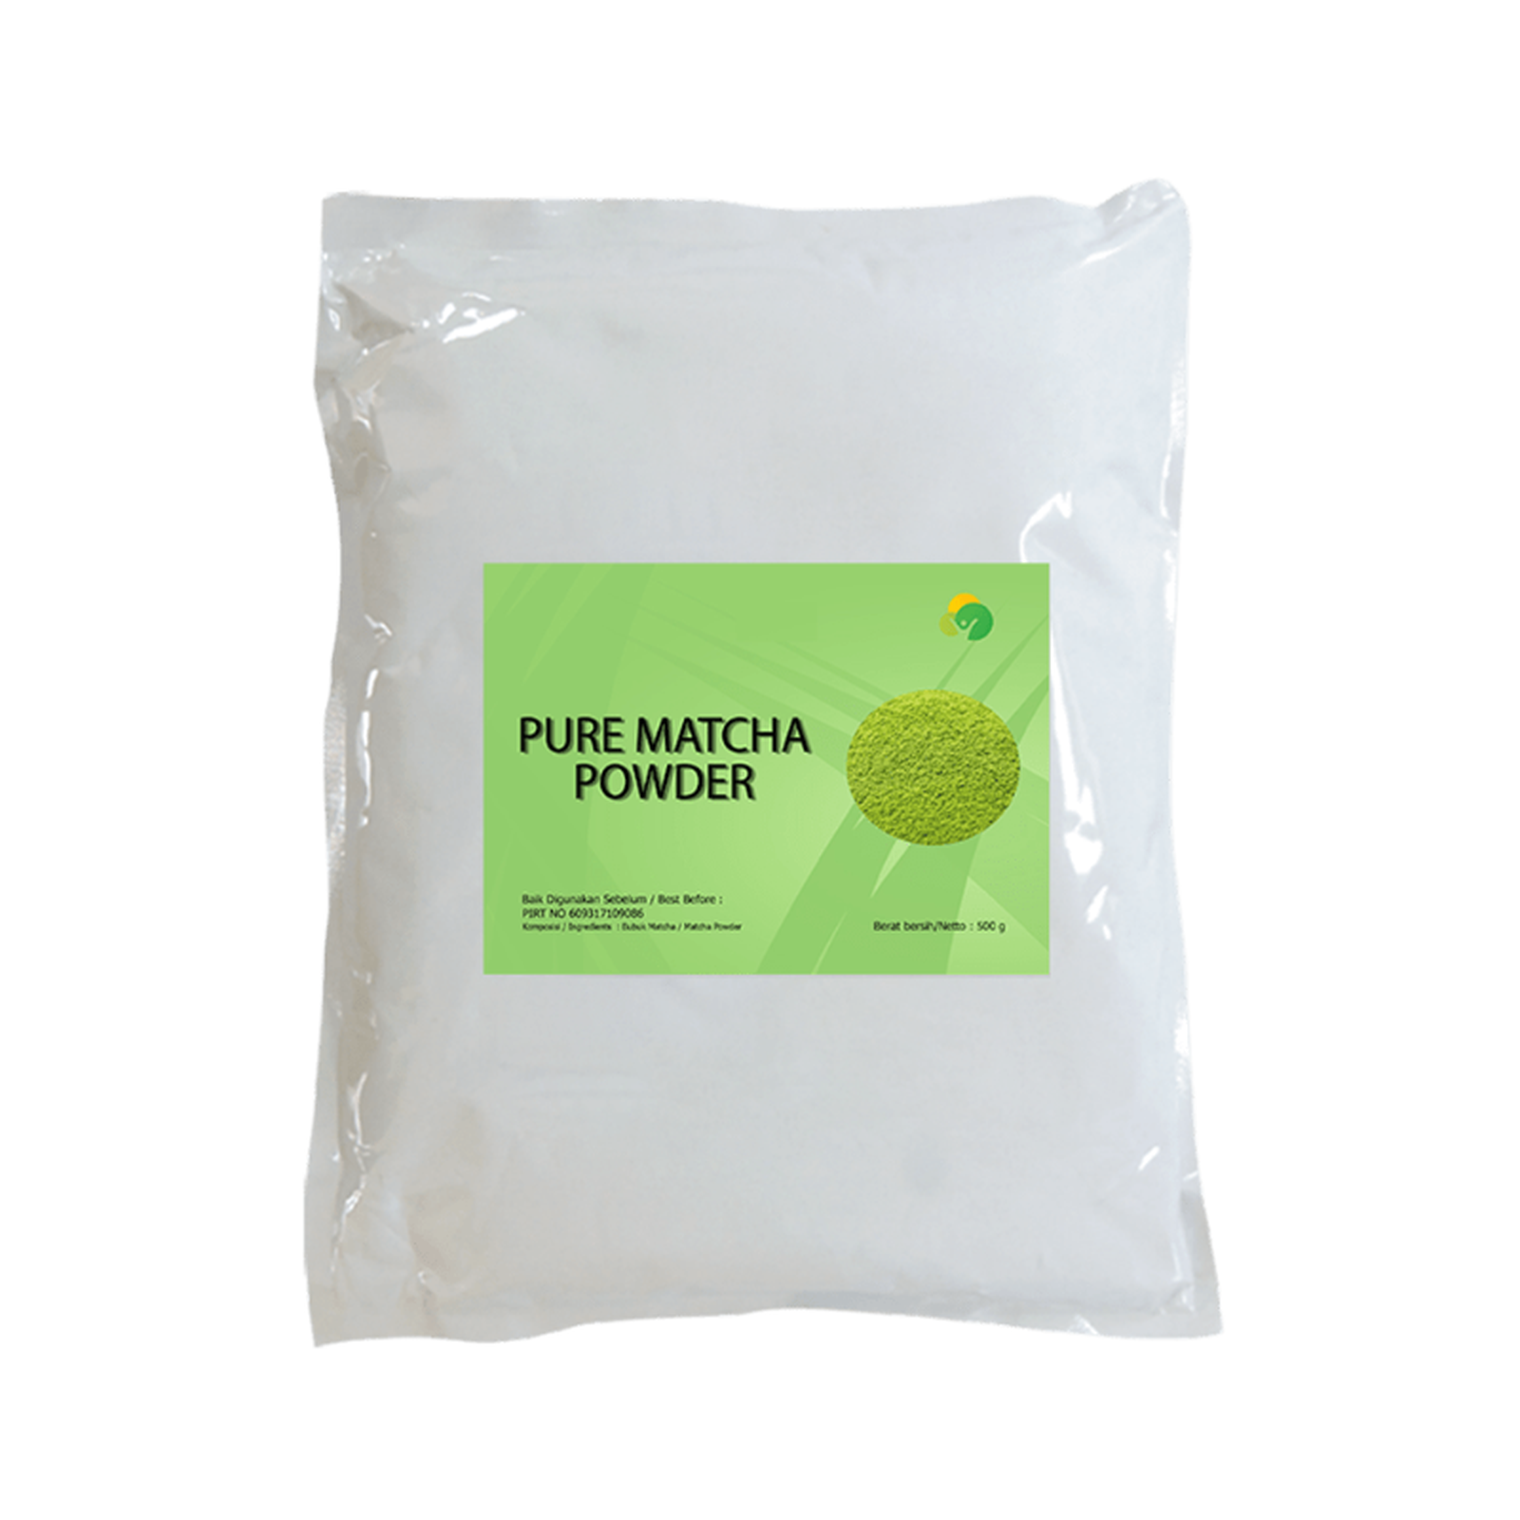 Health Today Powder Pure Matcha 1 Kg